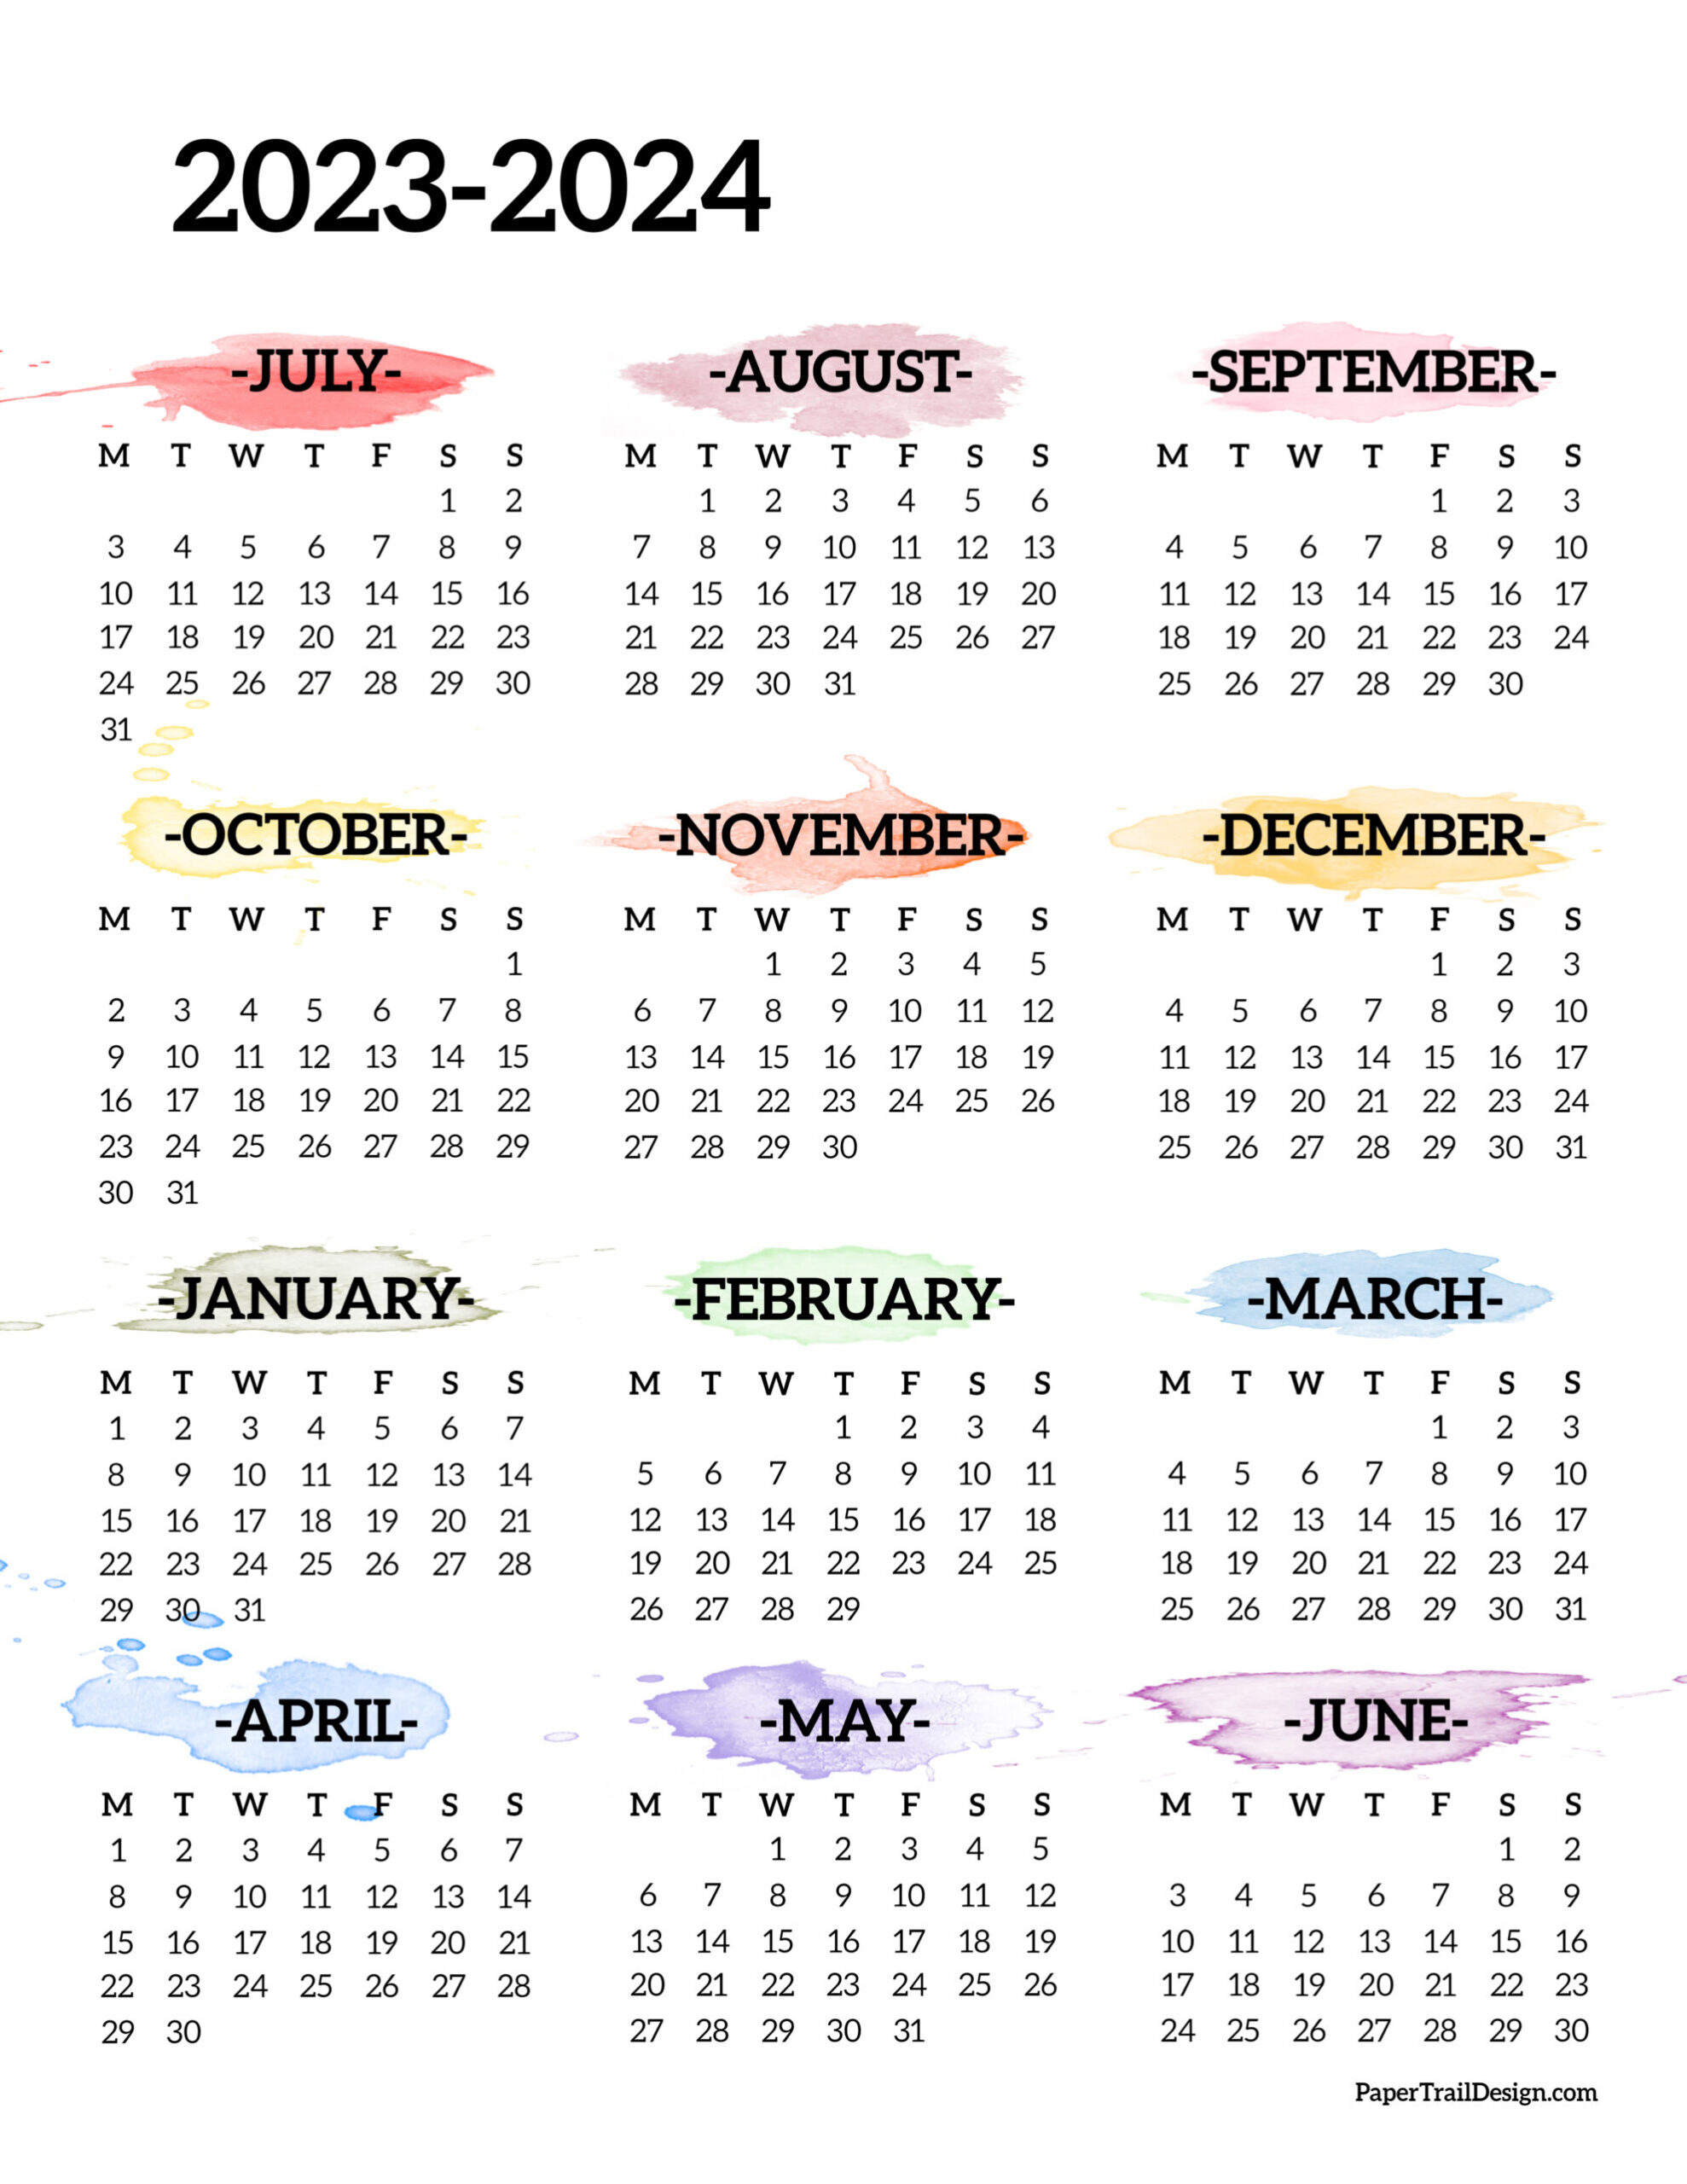 2023-2024 School Year Calendar Free Printable - Paper Trail Design | 2023 2024 Academic Calendar Printable